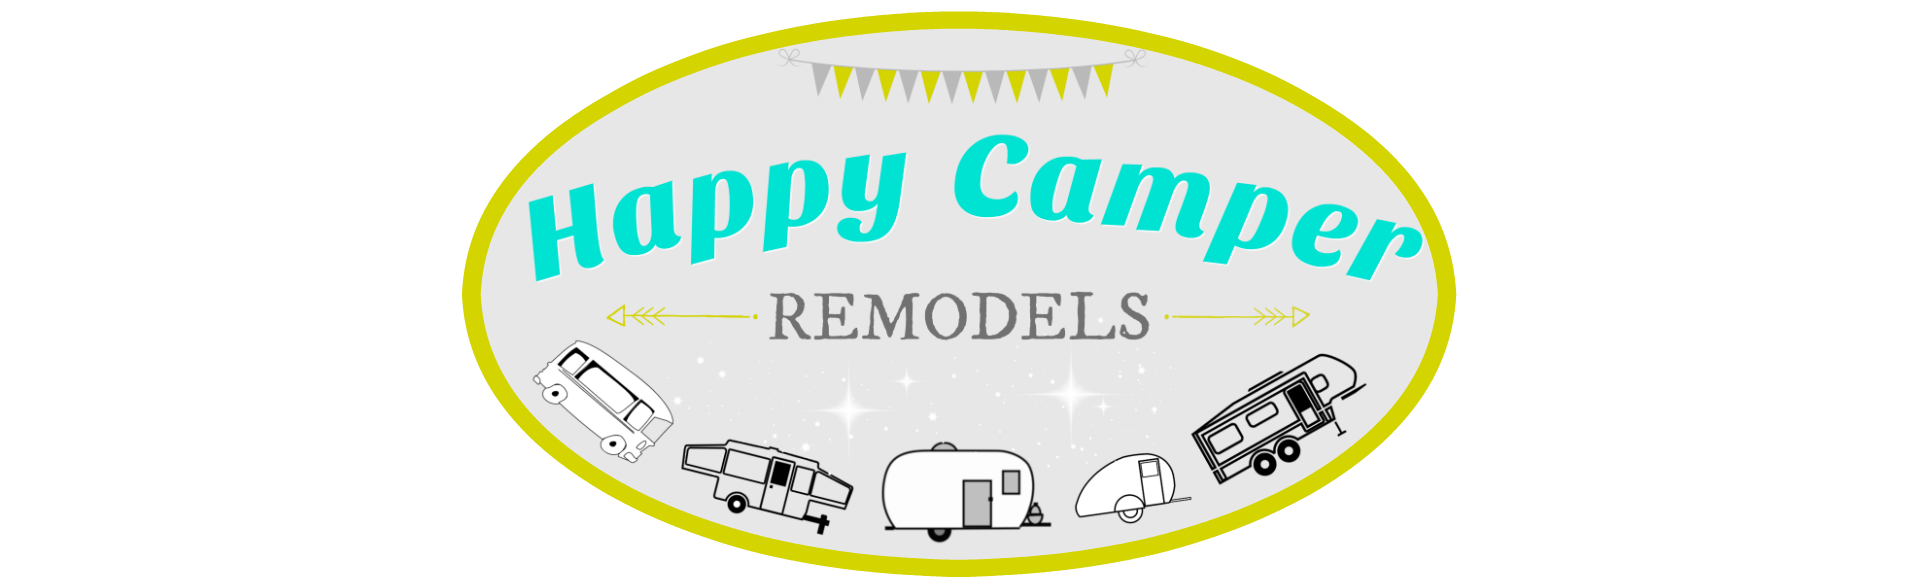 Happy Camper Remodels